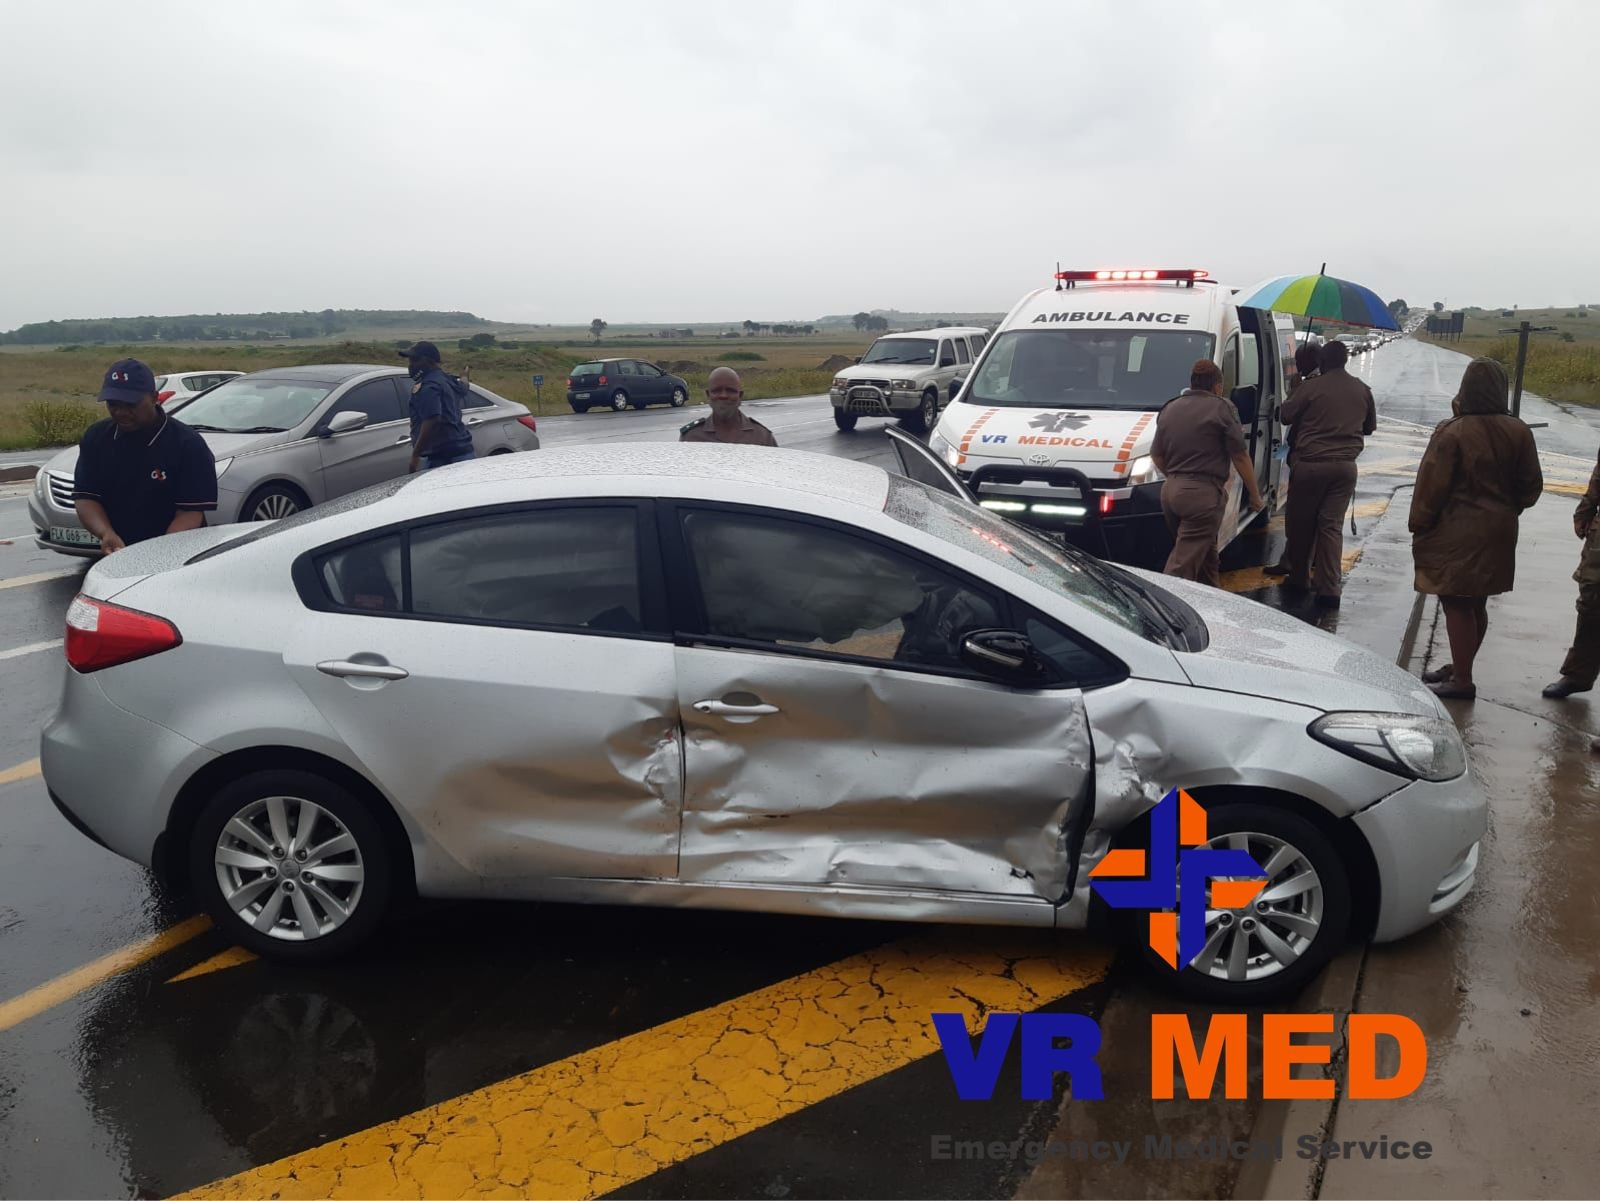 Two-vehicle collision in Bloemfontein